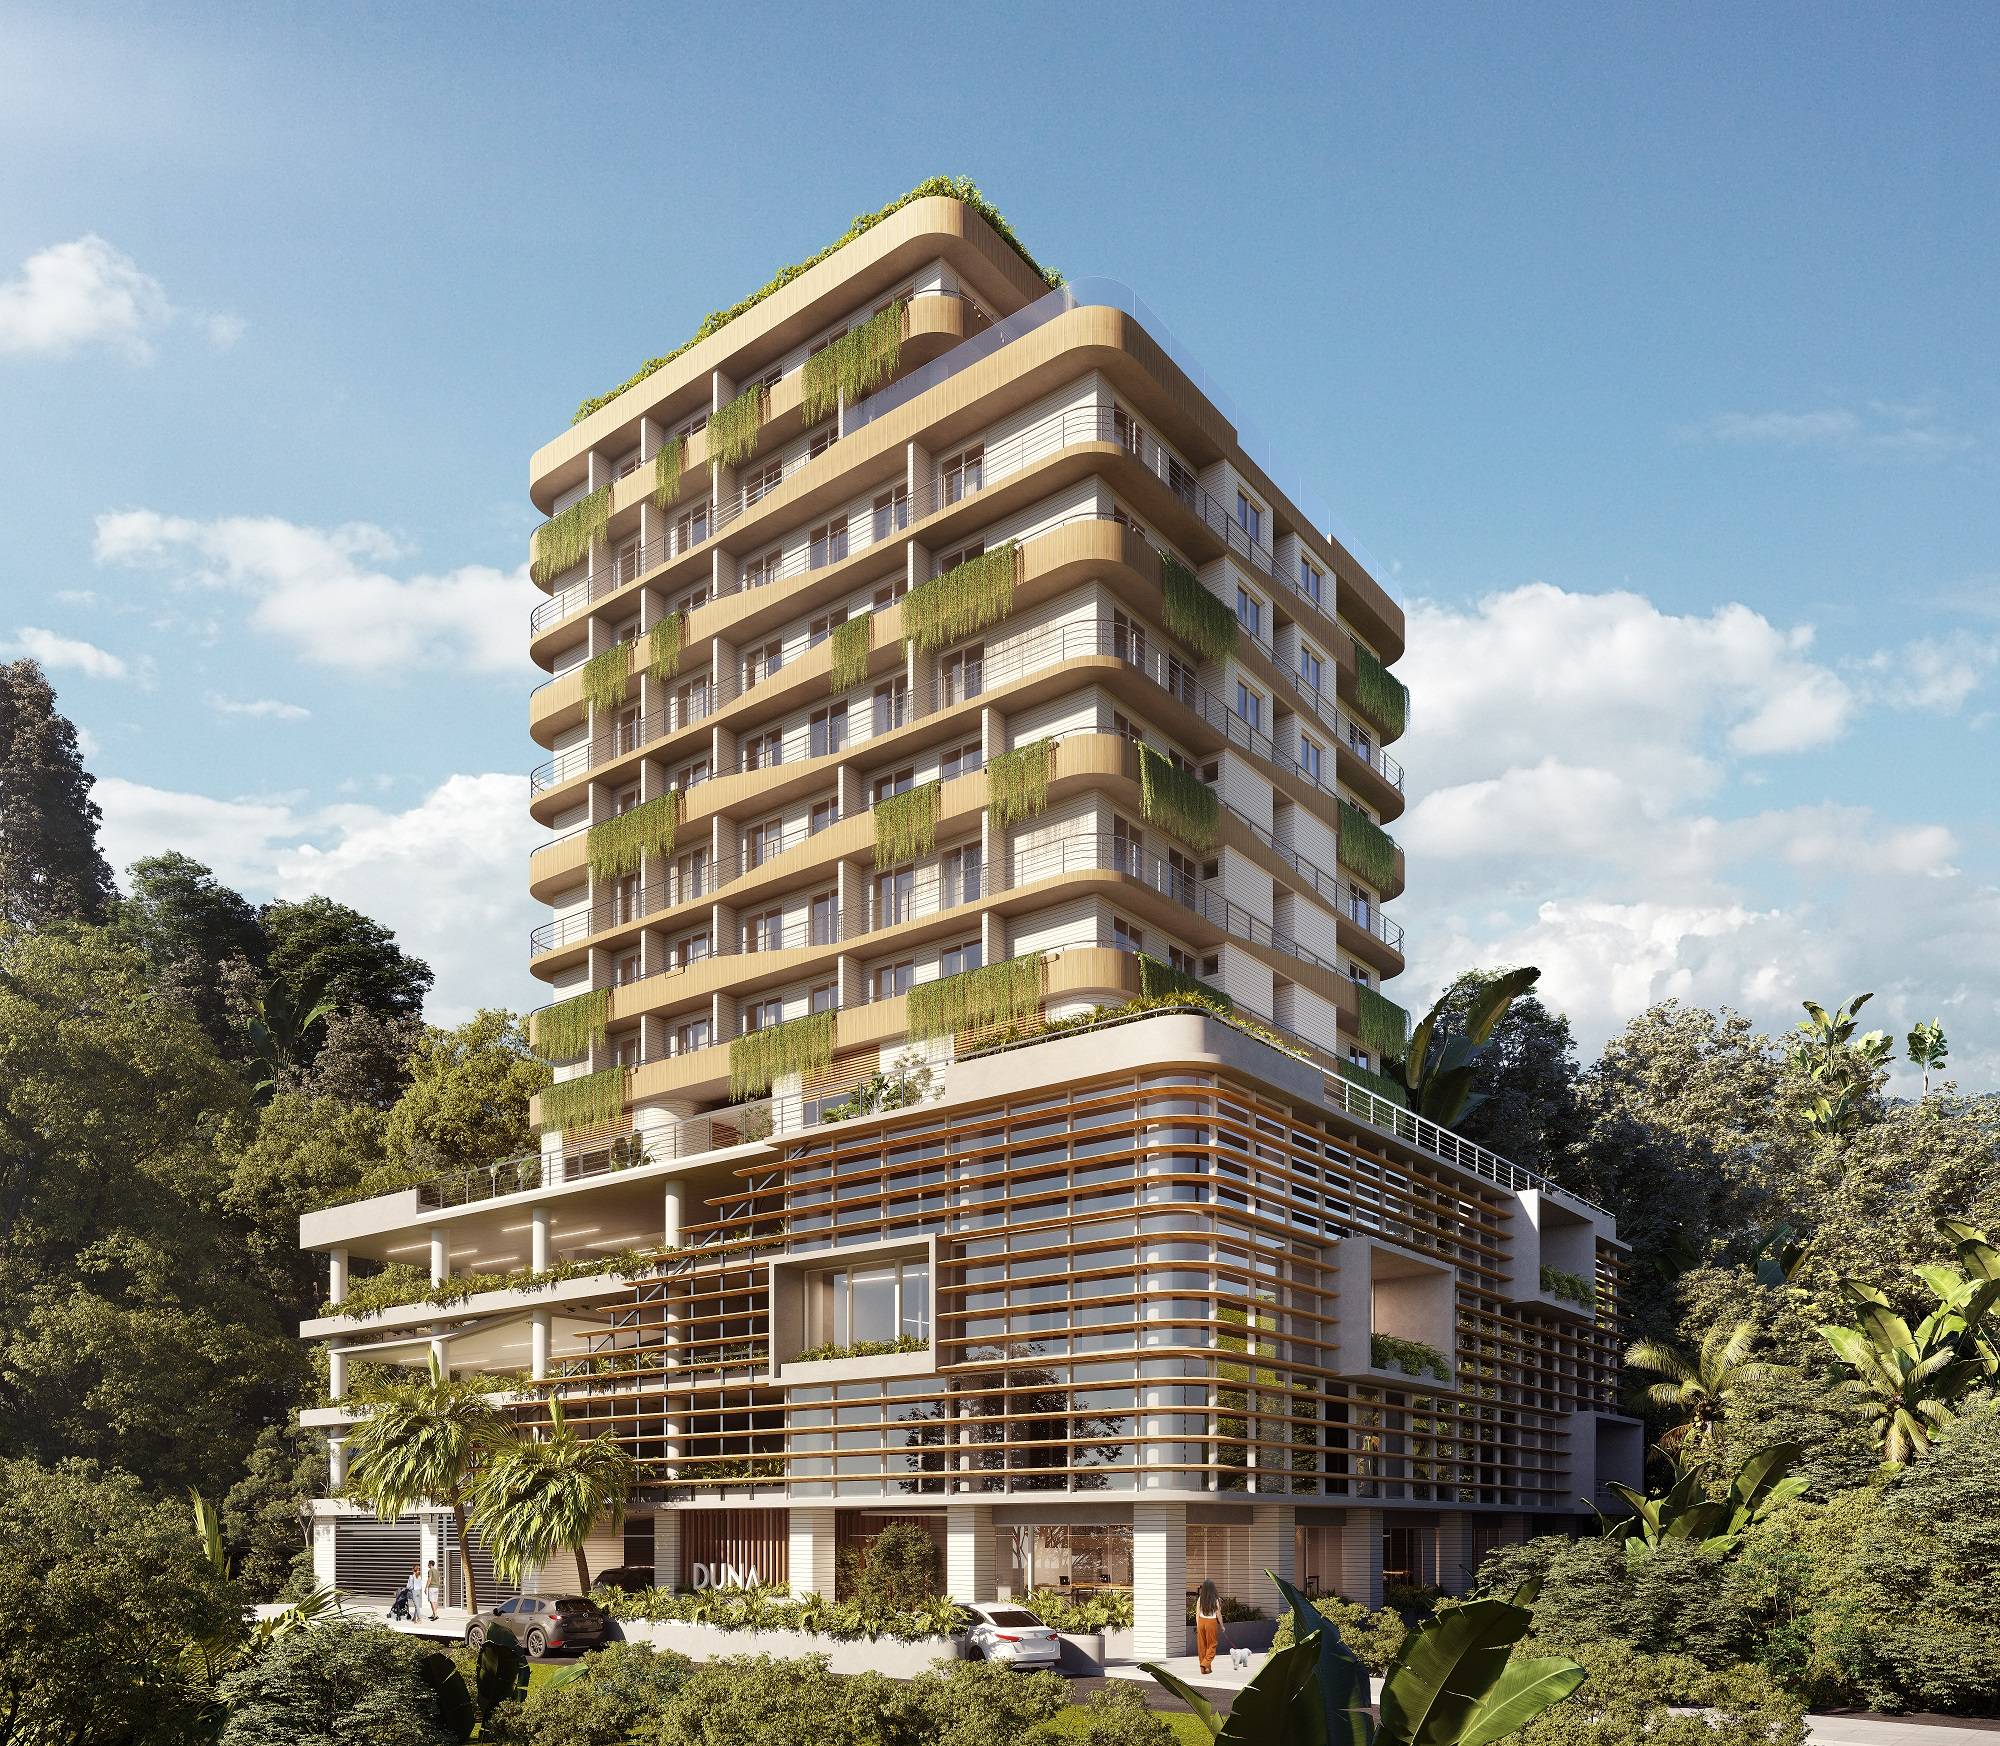 Exclusive Condominiums on a Pristine location on the Caribbean Island of Roatán